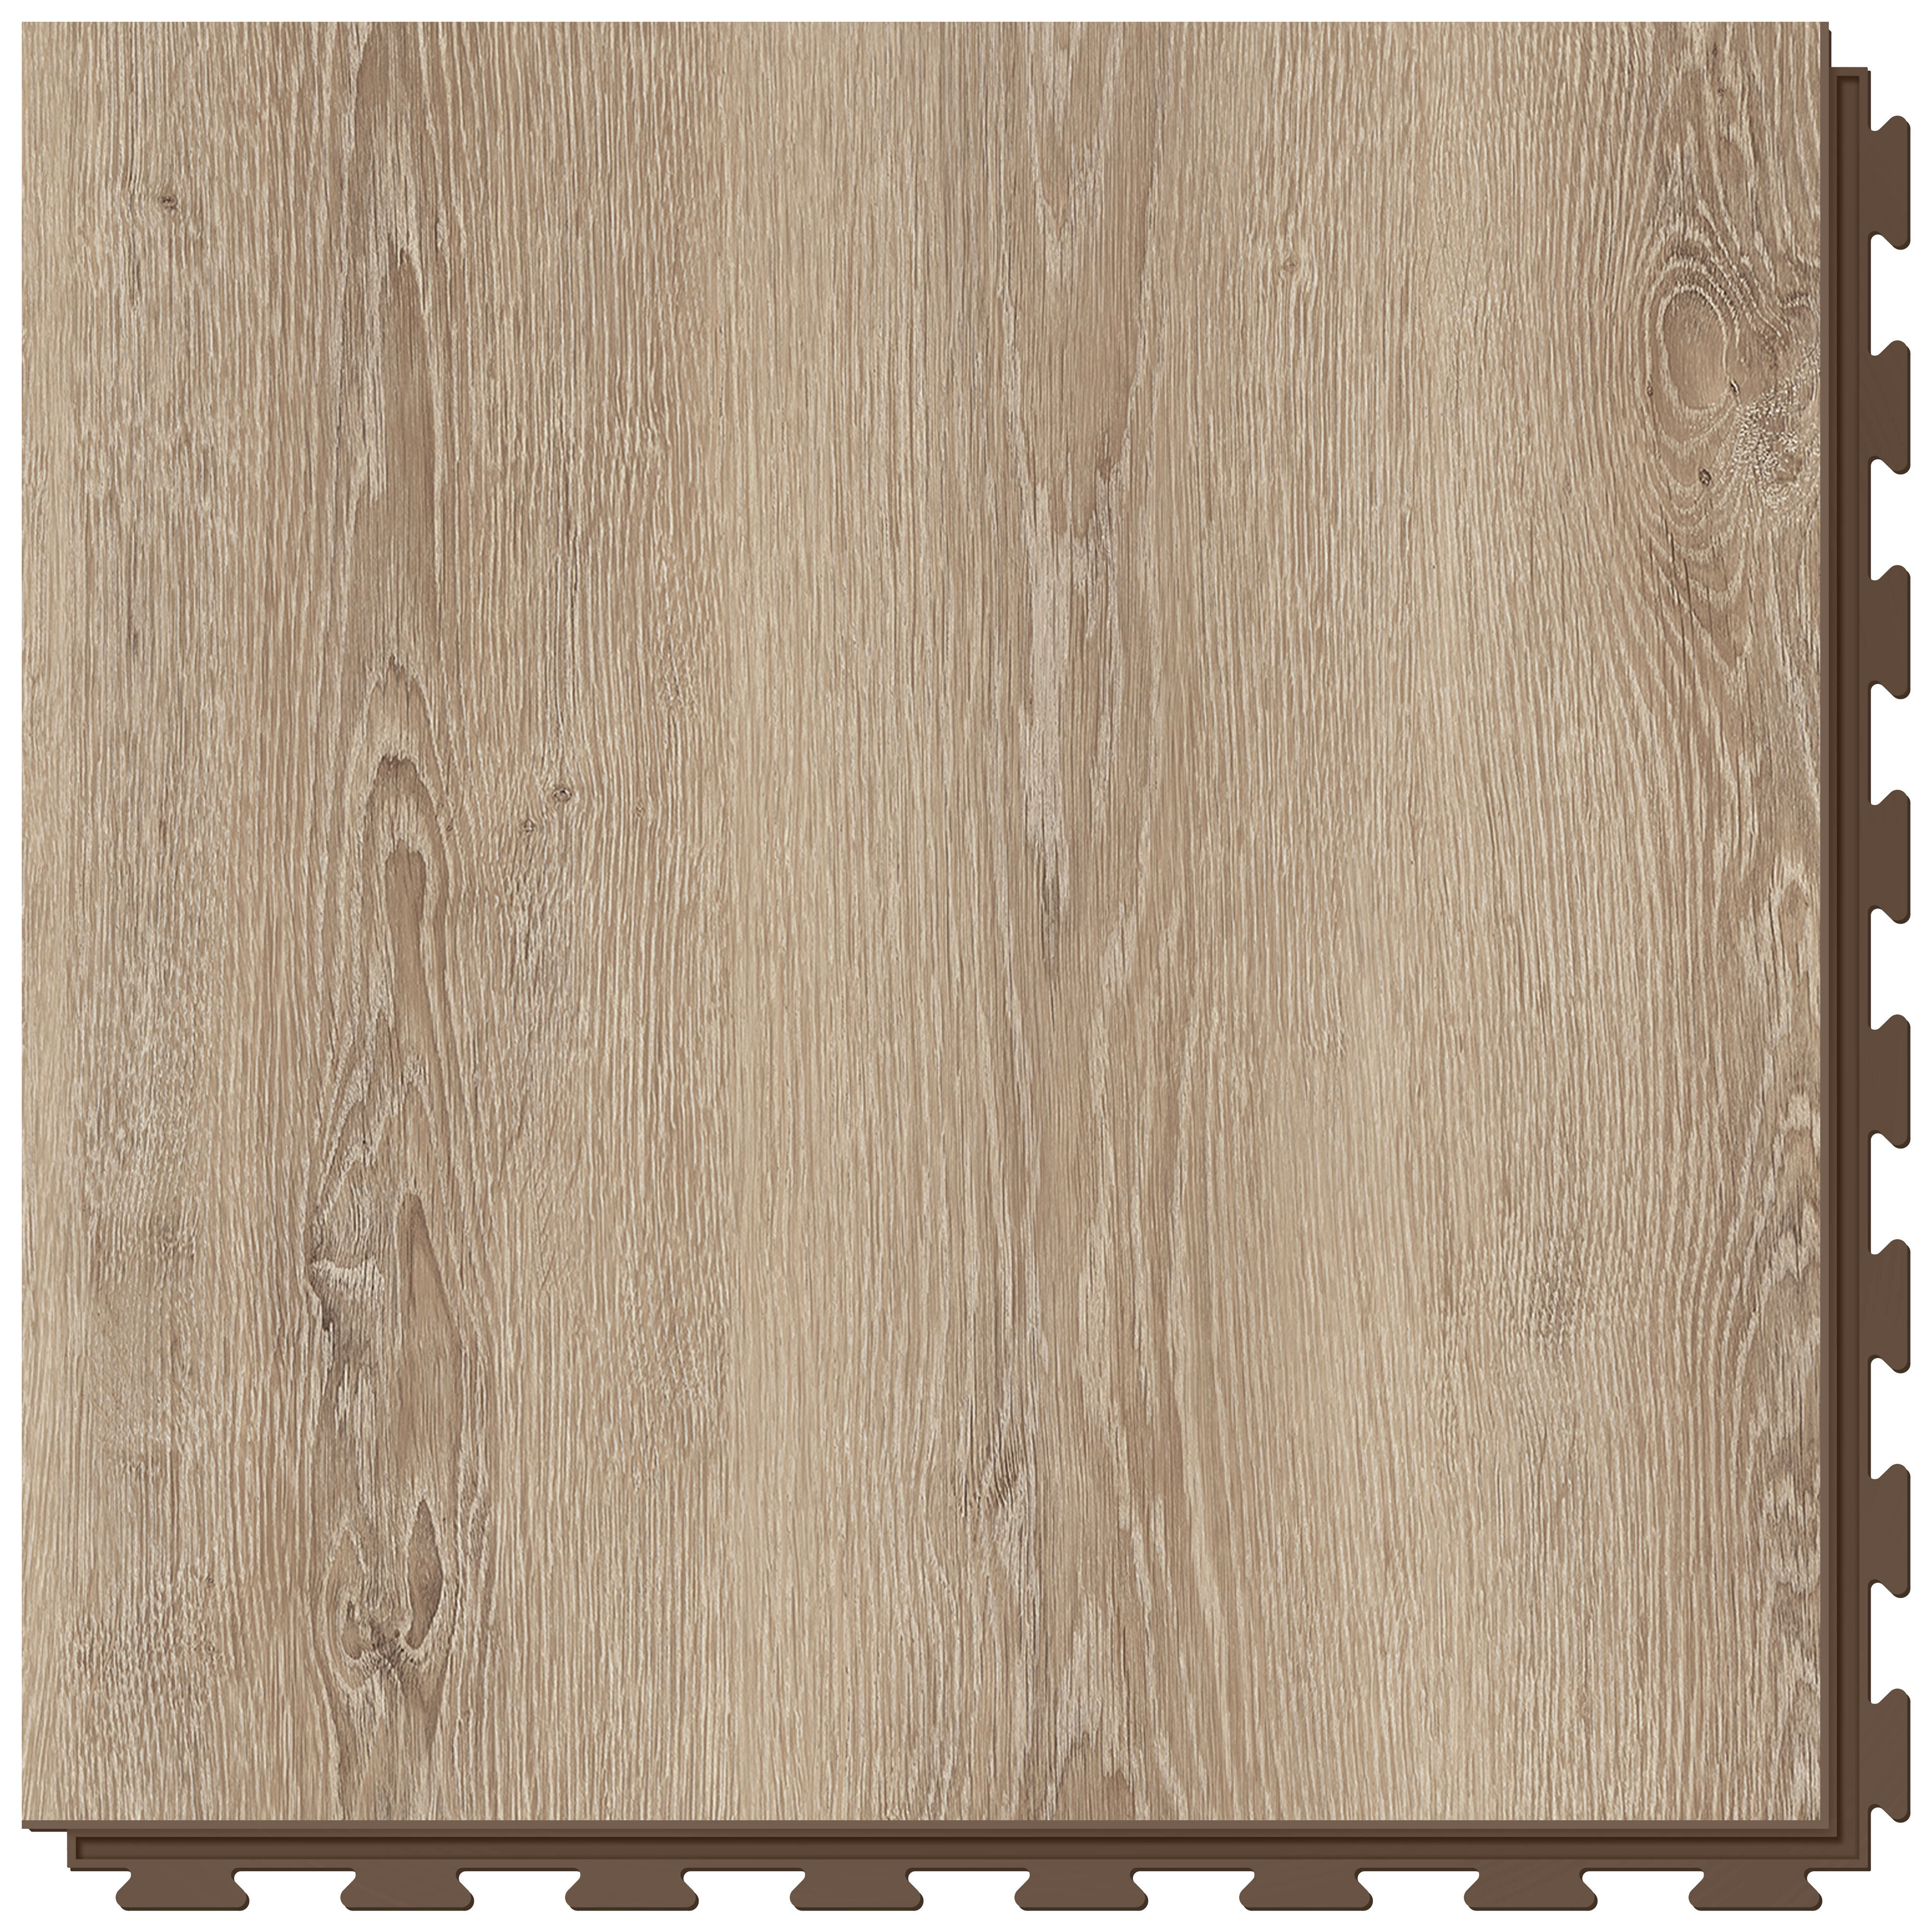 Hnědá PVC vinylová dlaždice Fortelock Business Tyrolean oak W001 Brown - délka 66,8 cm, šířka 66,8 cm, výška 0,7 cm